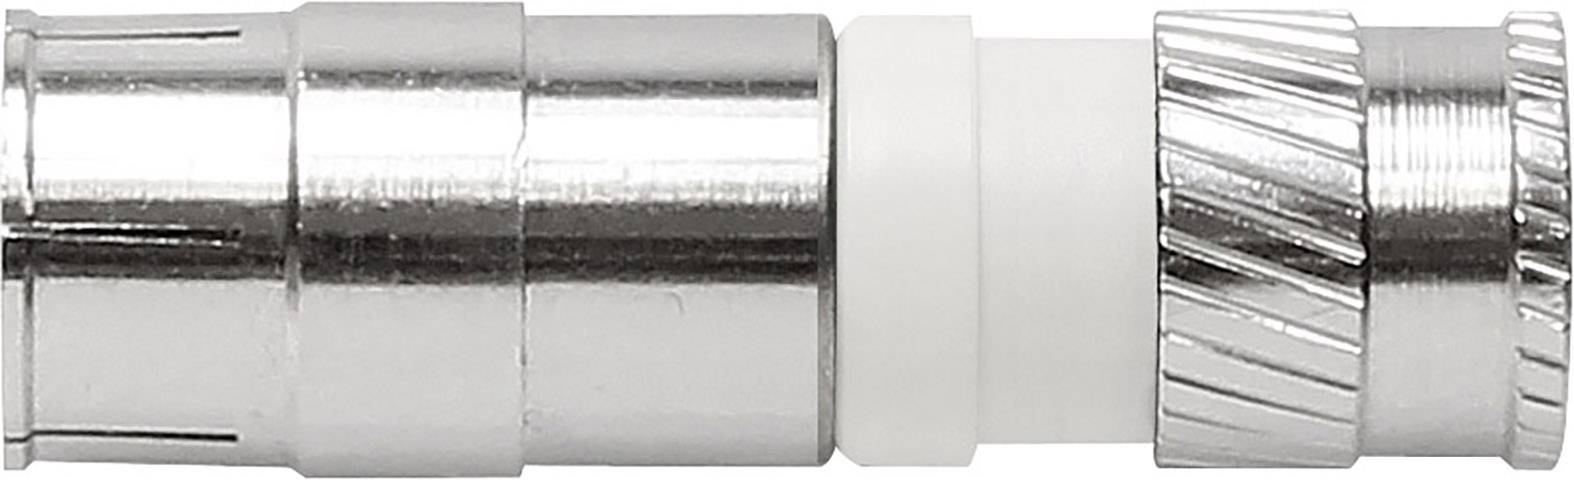 AXING Koax-IEC-Stecker-Kompression Kabel-Durchmesser: 5.1 mm